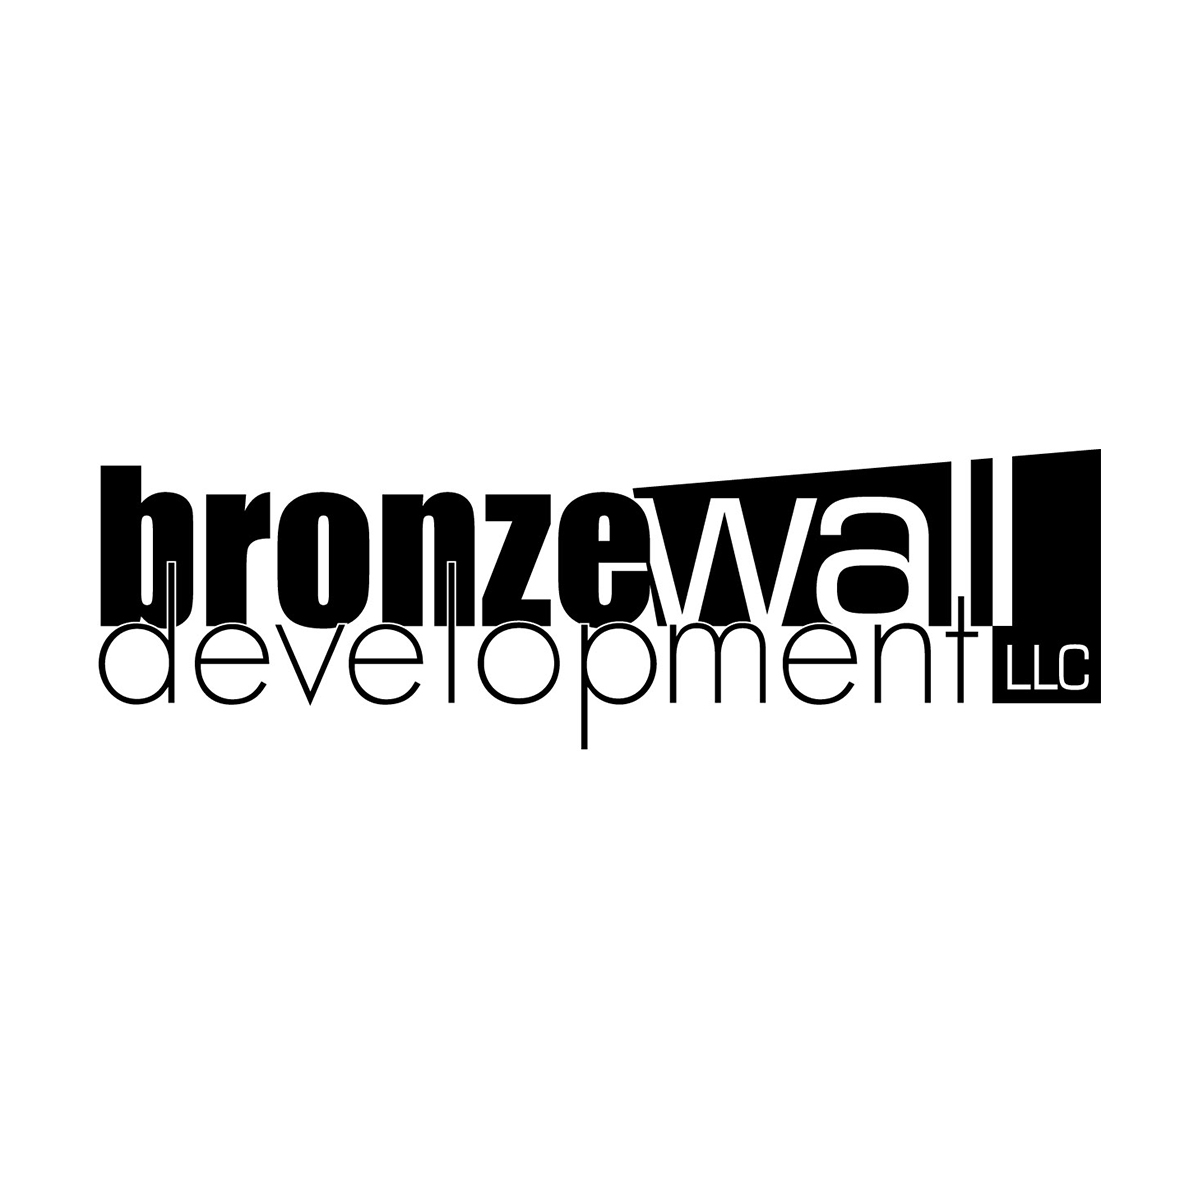 bronzewall.jpg